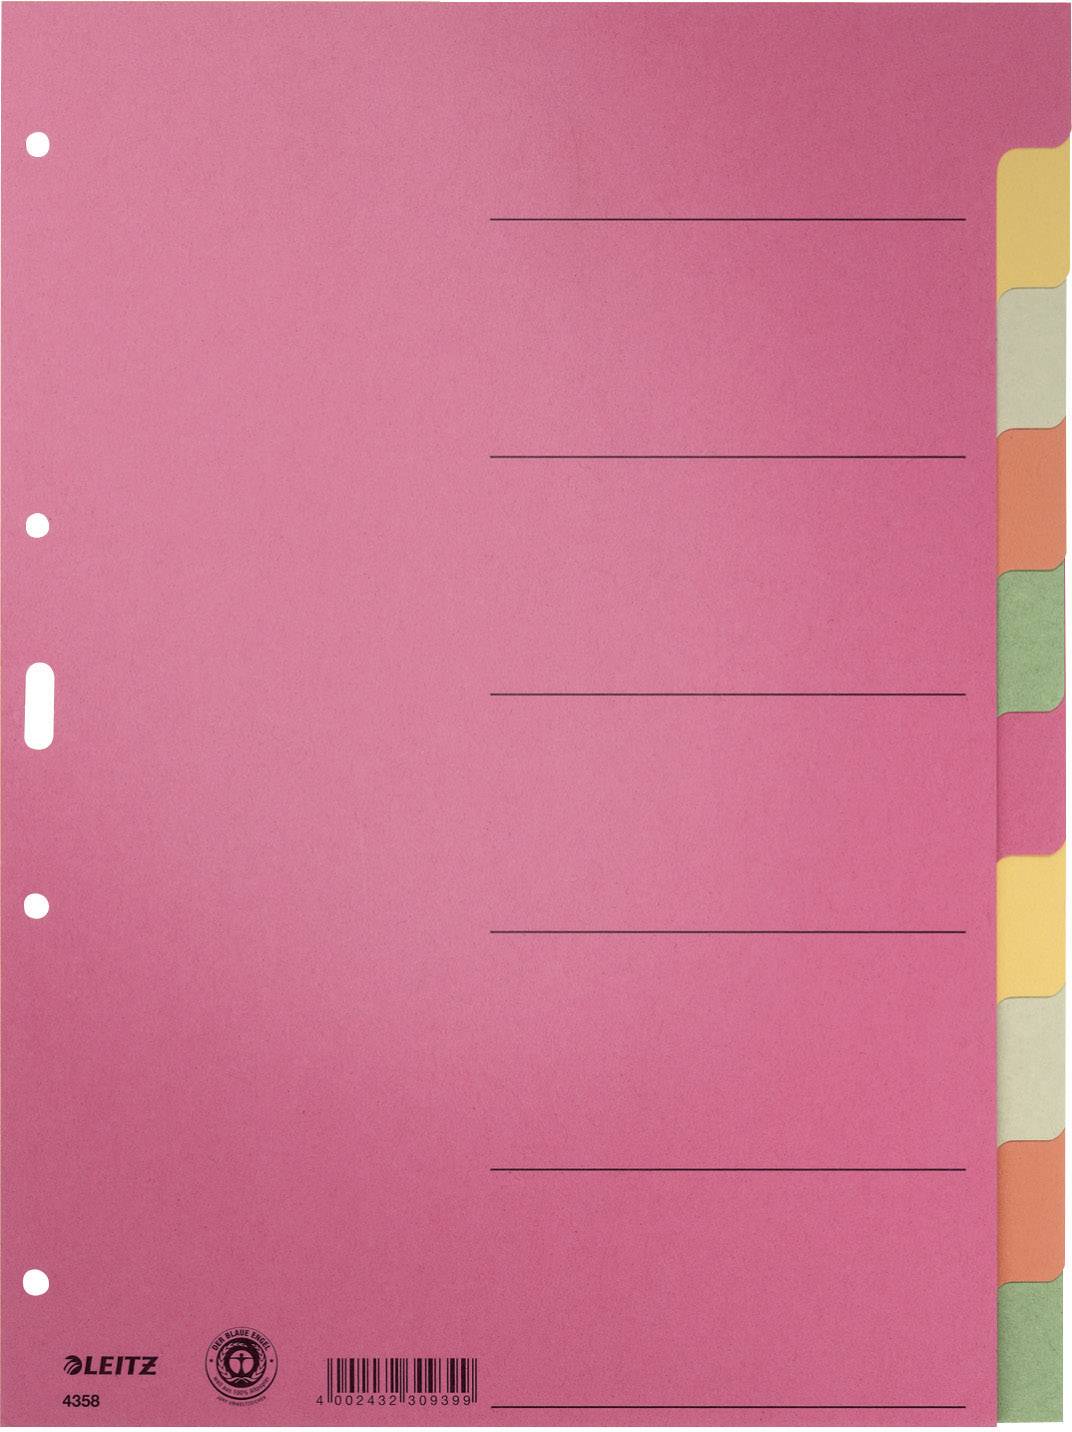 LEITZ Register Leitz 43580000 DIN A4 farbig 6 Blatt Rosa, Gelb, Grau, Orange, Grün 1 Bogen